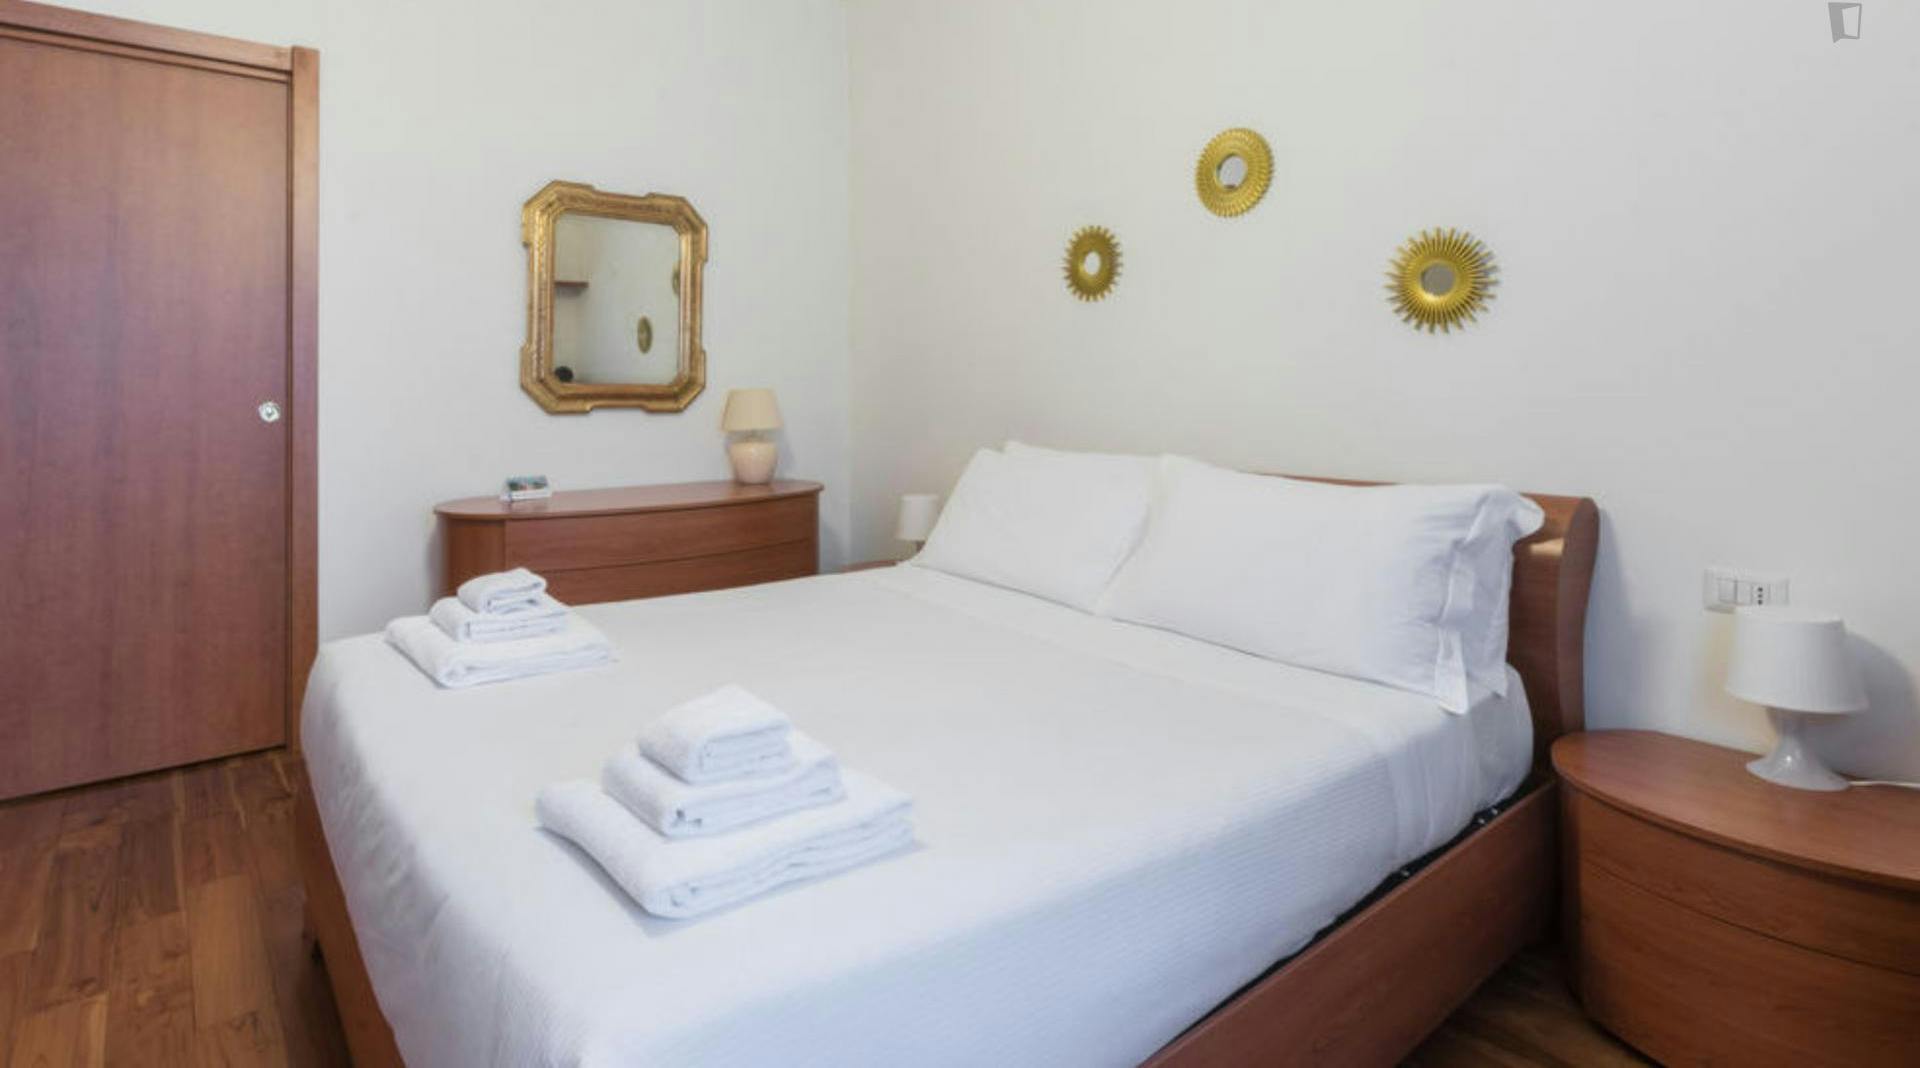 Classy 1-bedroom flat in Precotto